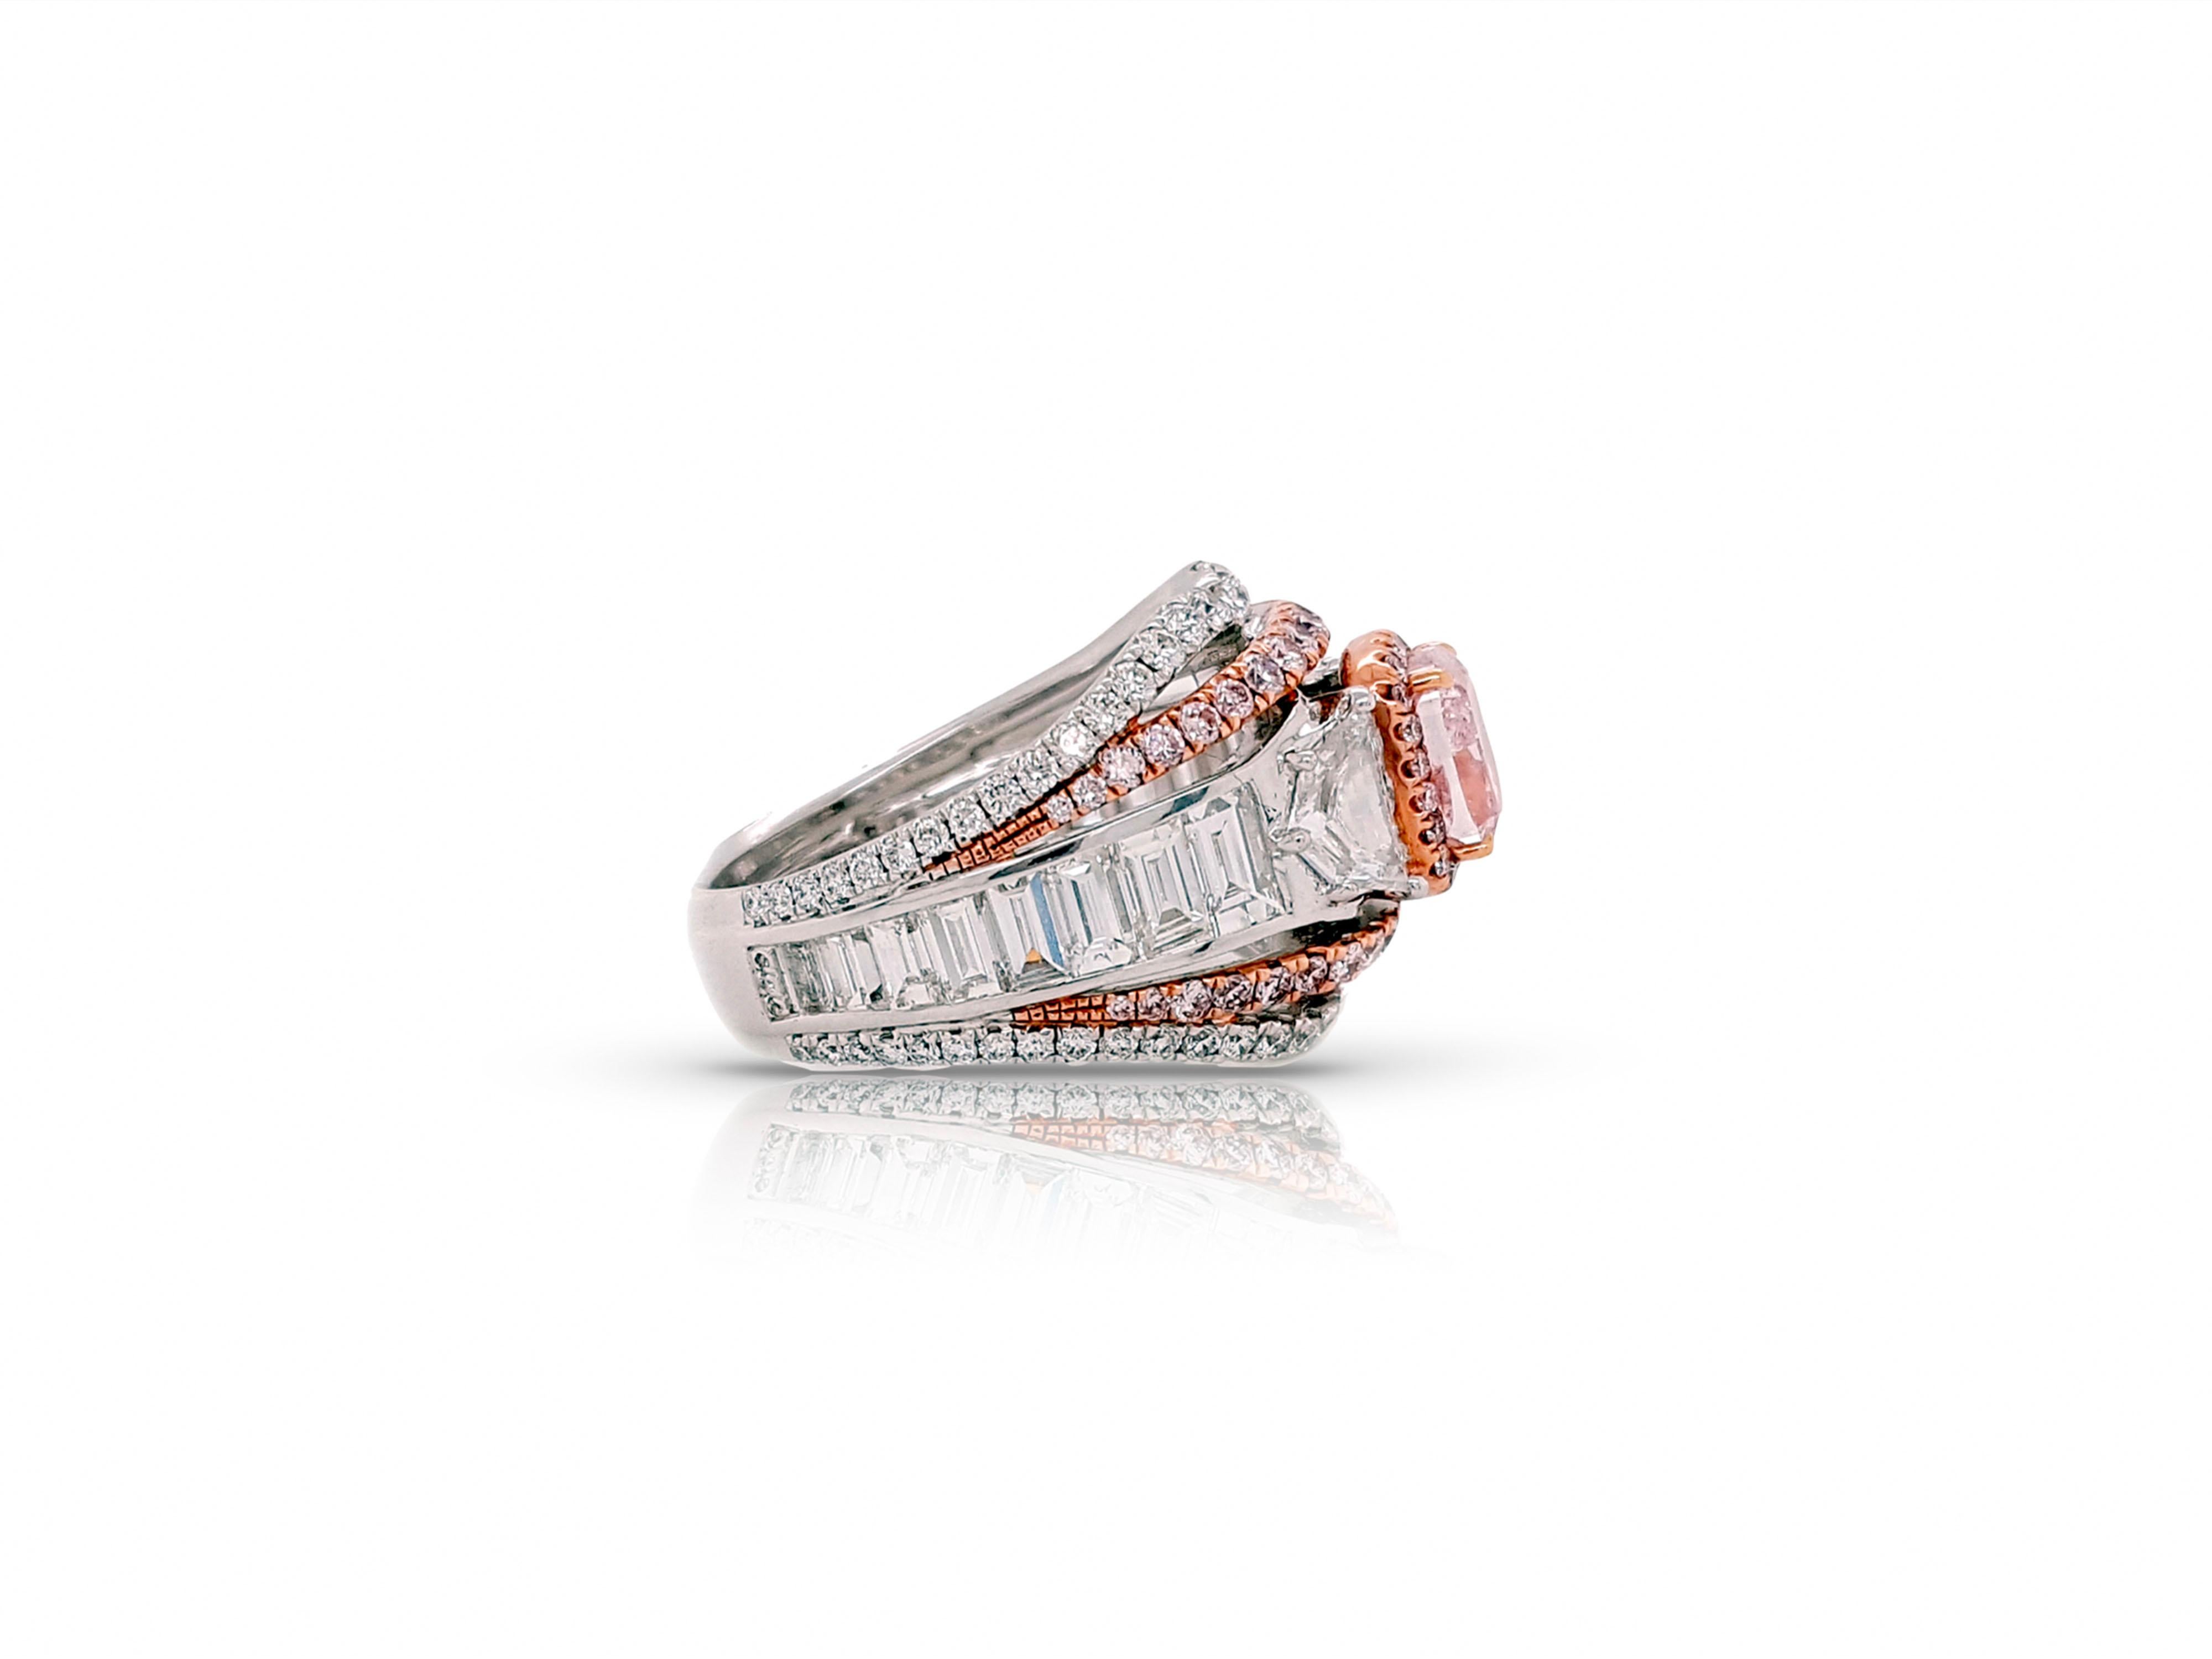 Victorien 1.32 Carat Fancy Intense Pink Diamond Cocktail Ring, 18K Gold GIA Certified (en anglais) en vente